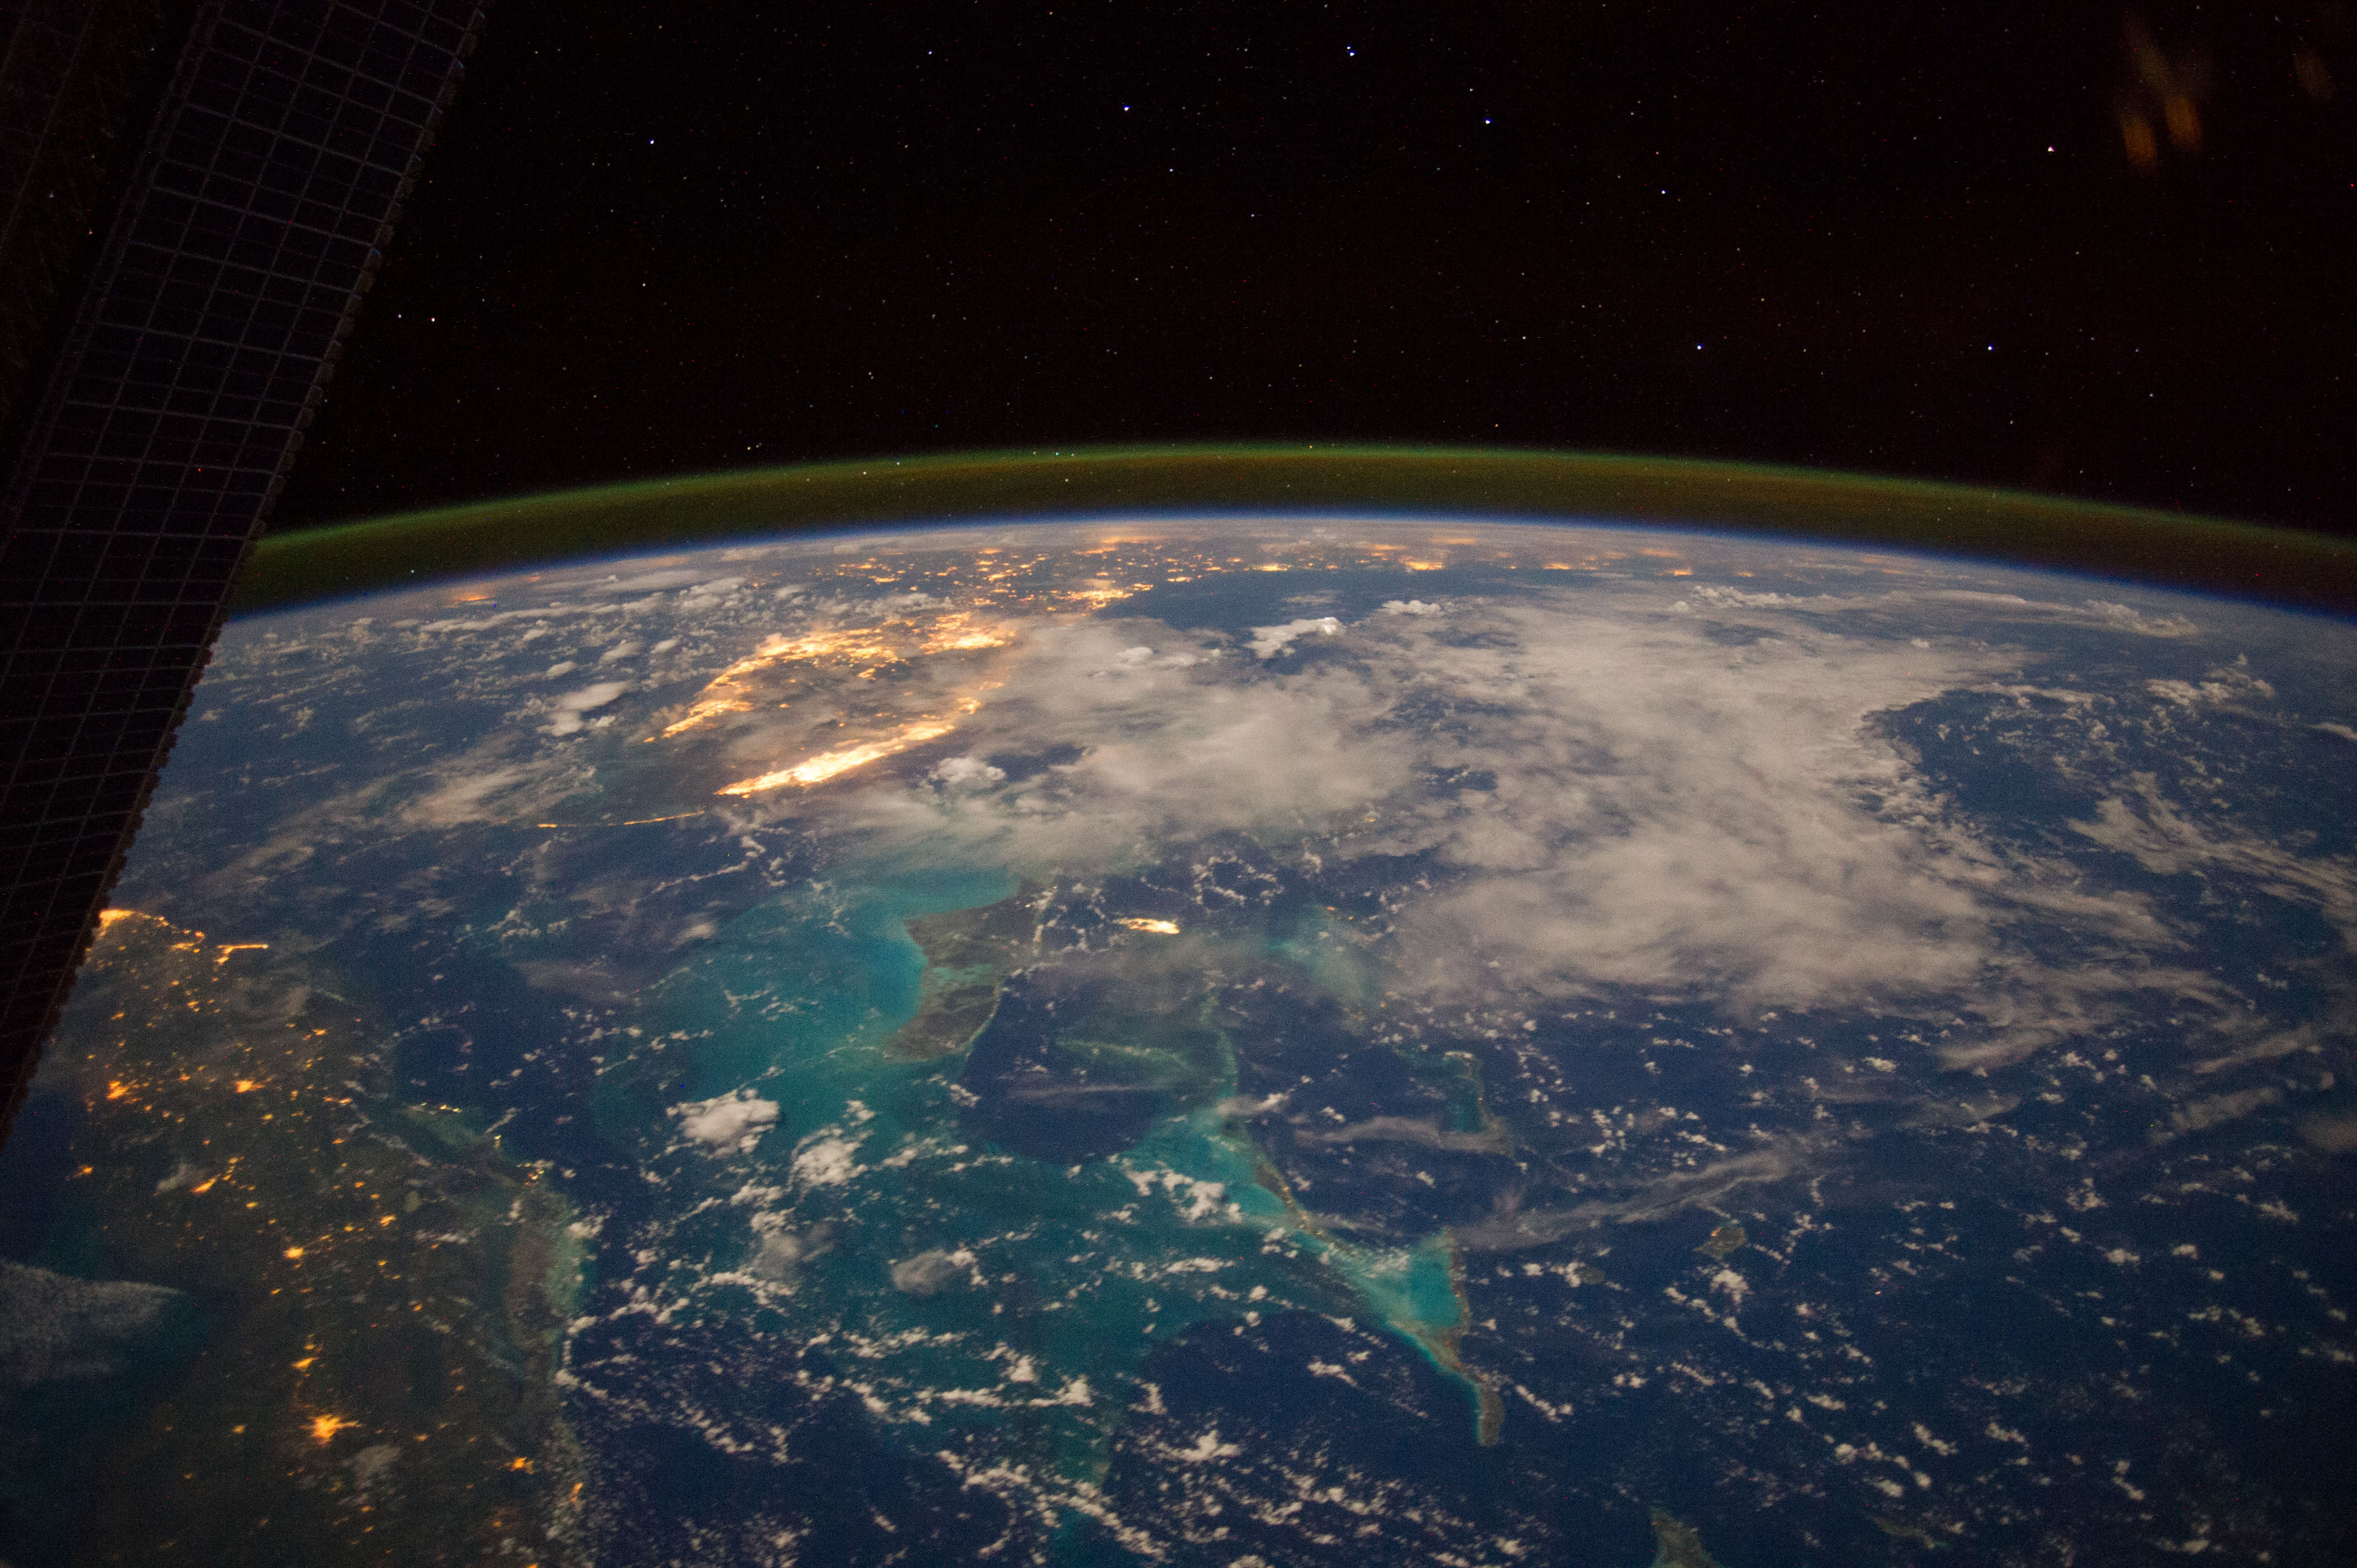 bahamas, the carribean, earth, cuba, nasa, florida, from space